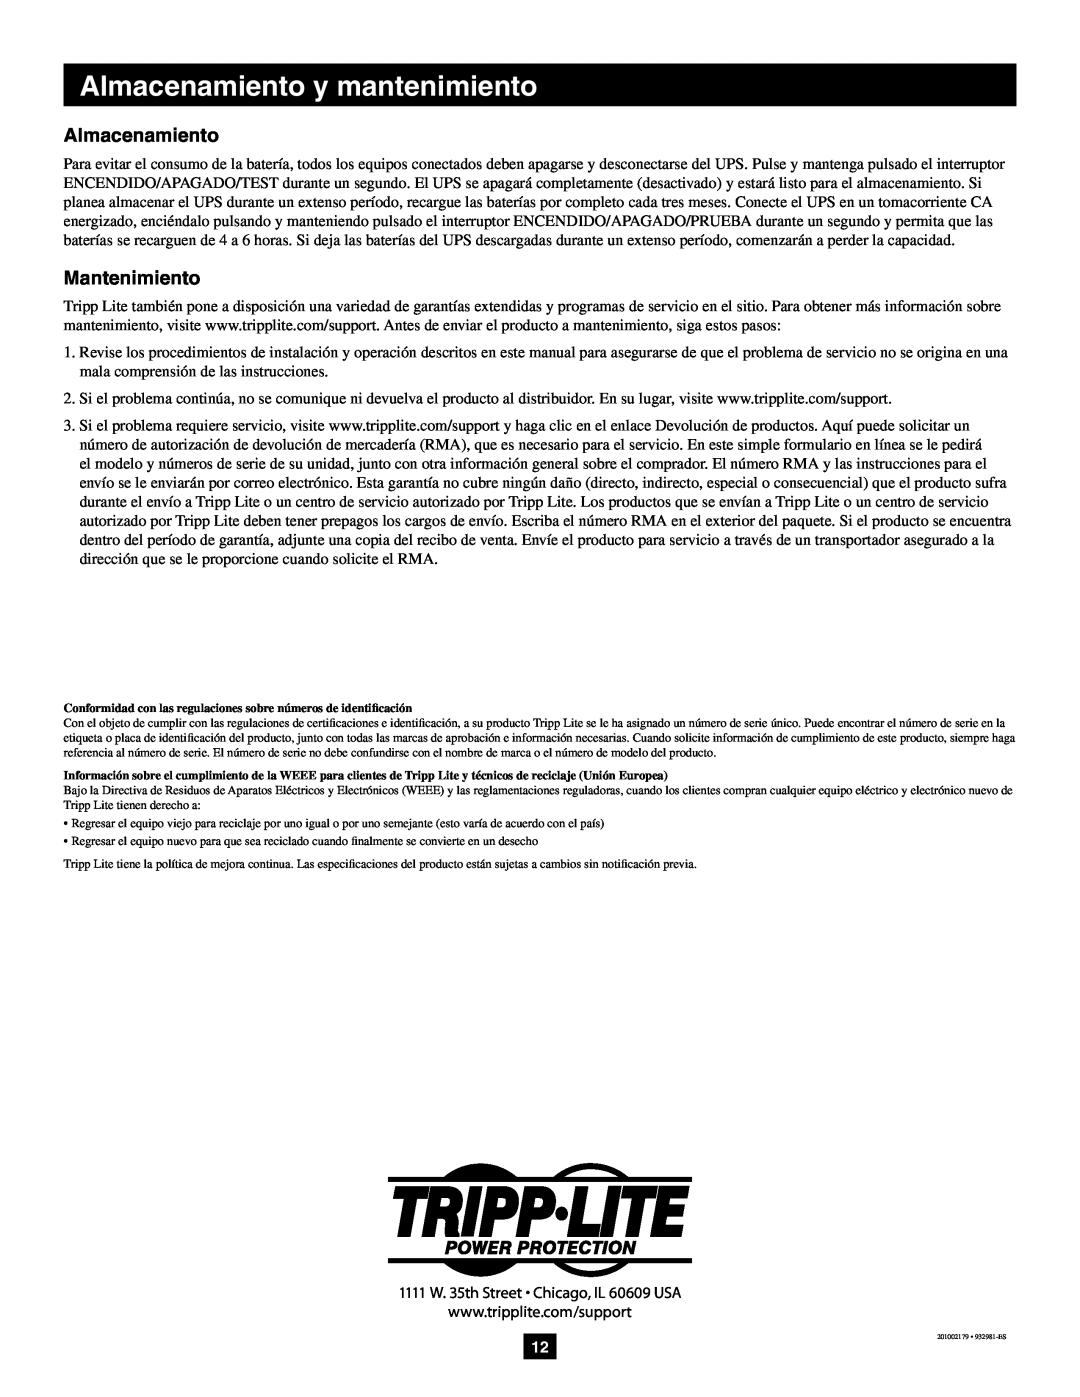 Tripp Lite AVRX750U, AVRX550U owner manual Mantenimiento, Almacenamiento y mantenimiento 